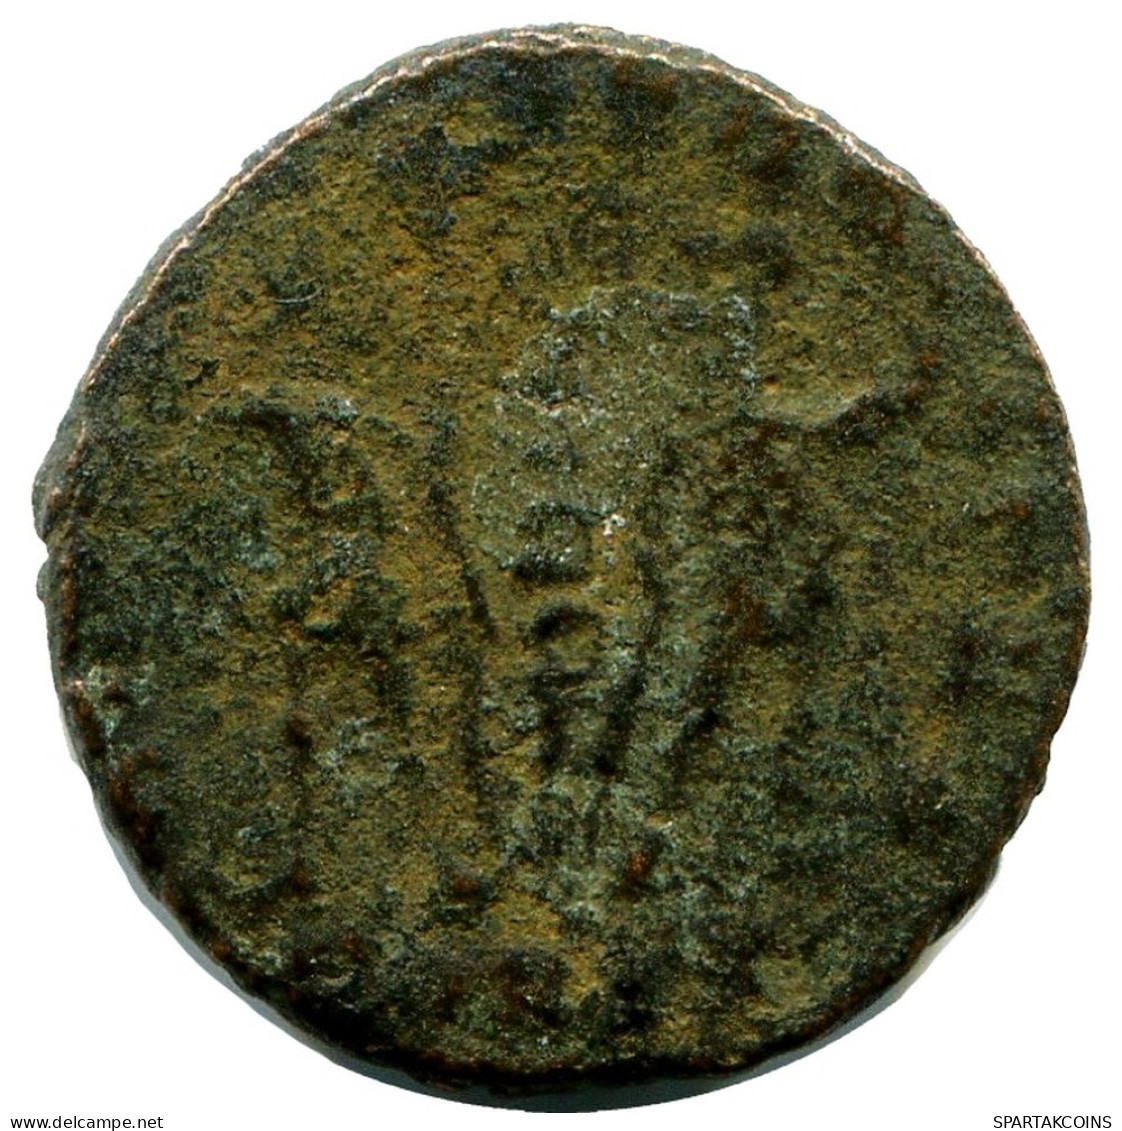 ROMAN Moneda CONSTANTINOPLE FROM THE ROYAL ONTARIO MUSEUM #ANC11061.14.E.A - El Impero Christiano (307 / 363)